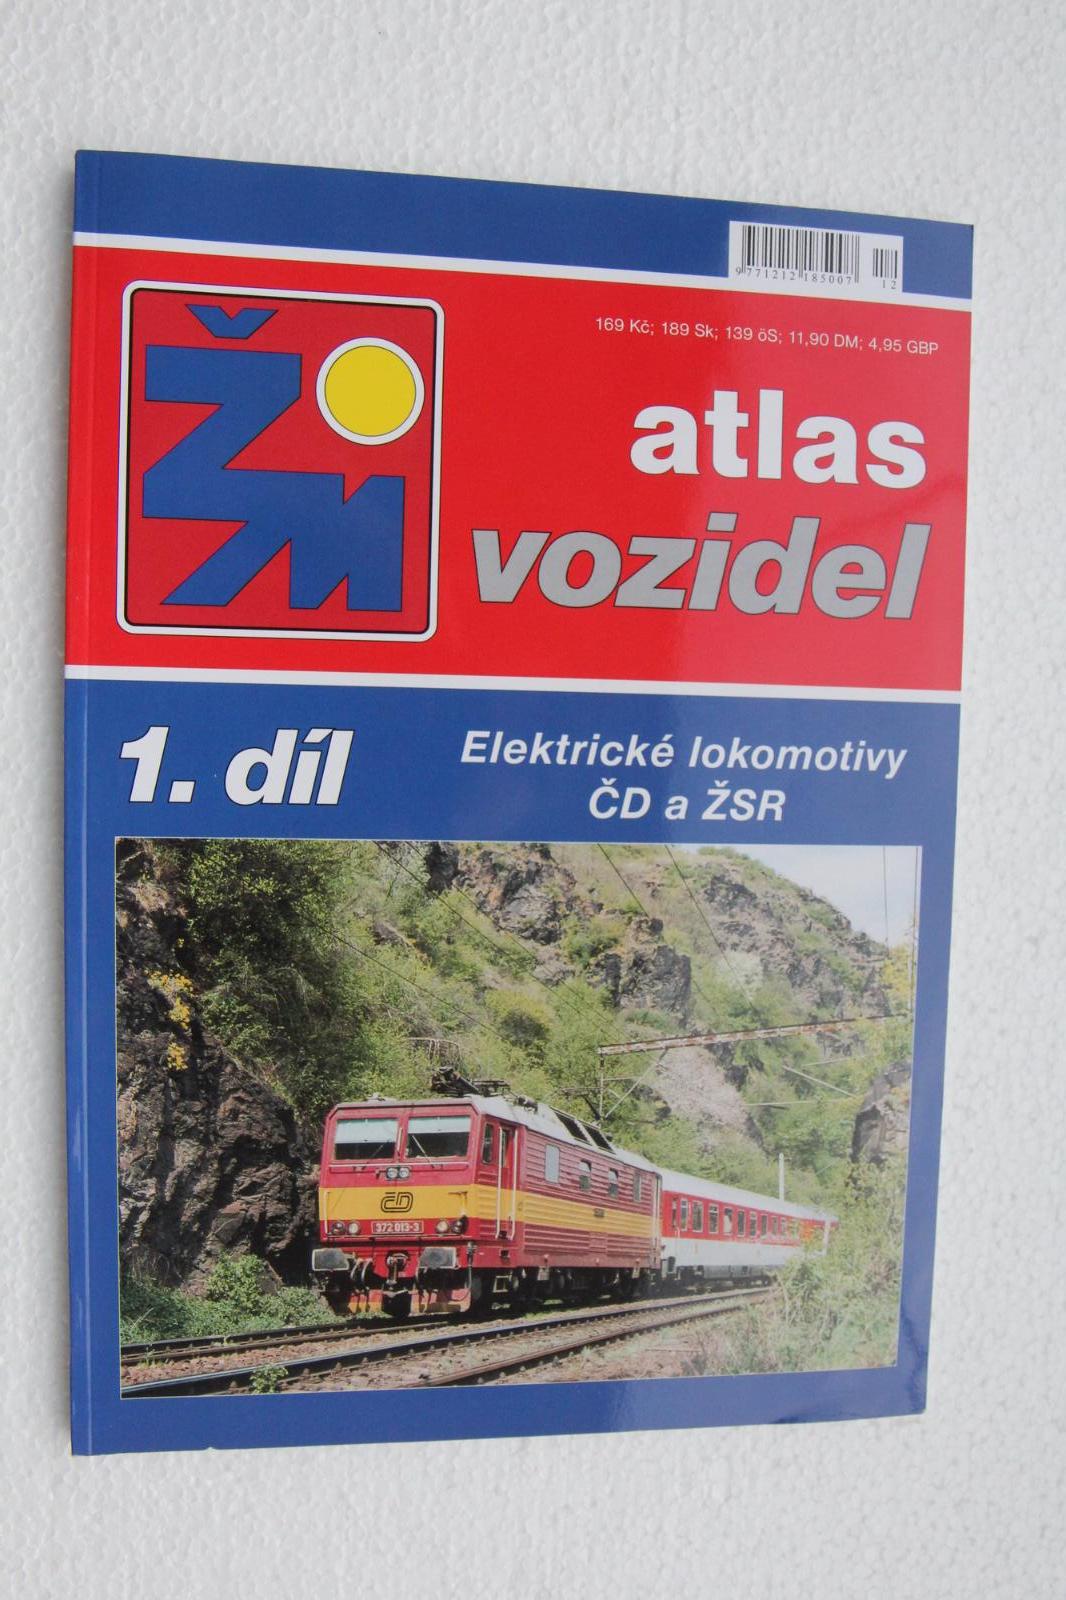 Atlas vozidel 1.díl. Elektrické lokomotivy ČD a ŽSR | Aukro